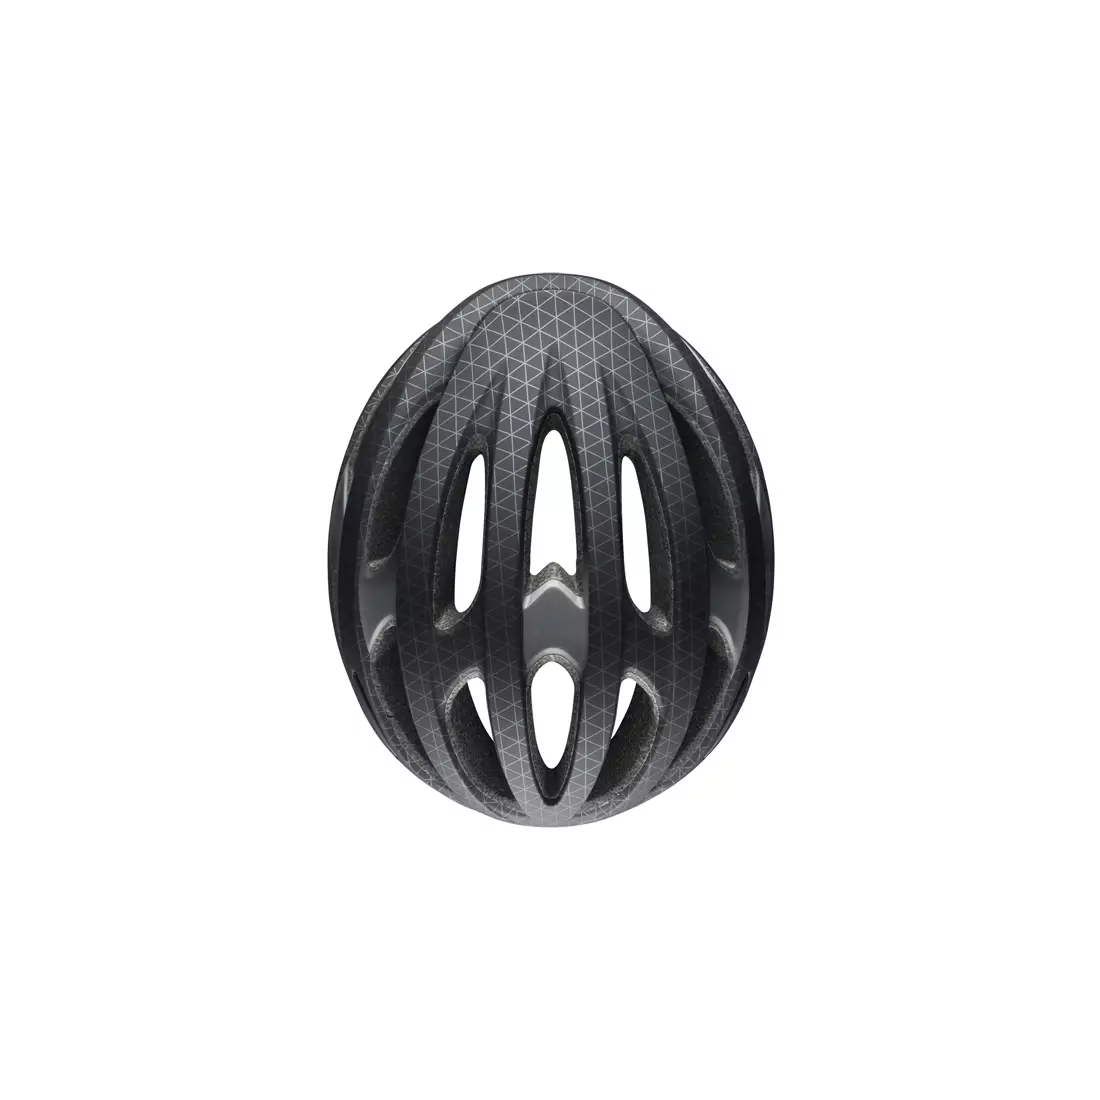 BELL FORMULA BEL-7088553 matte black gunmetal bicycle helmet